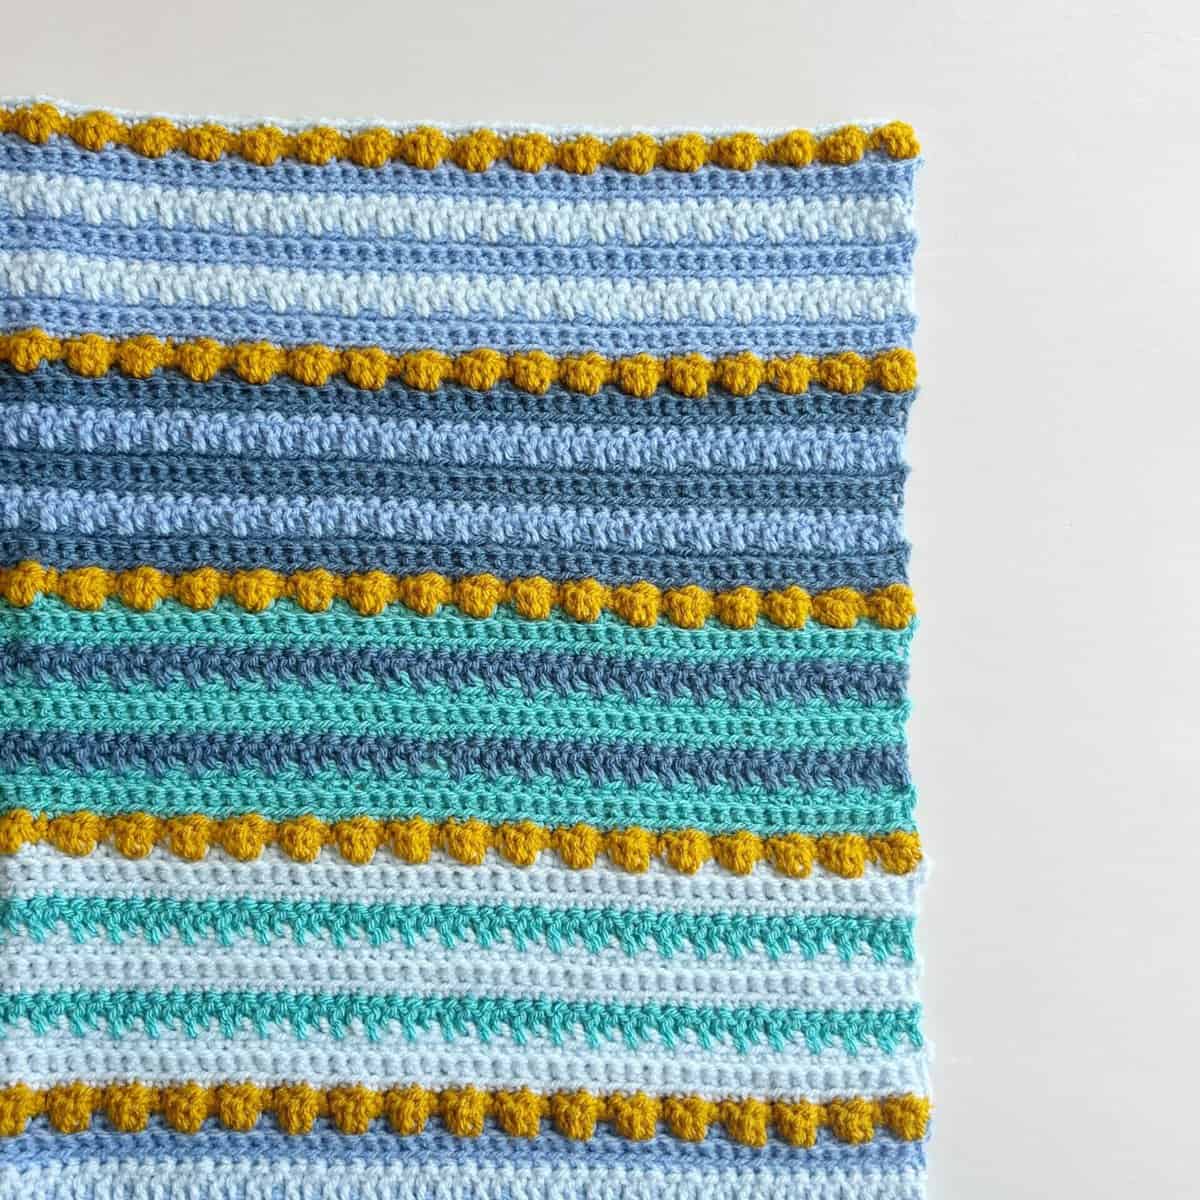 Bobble Stitch Crochet Blanket Pattern Free